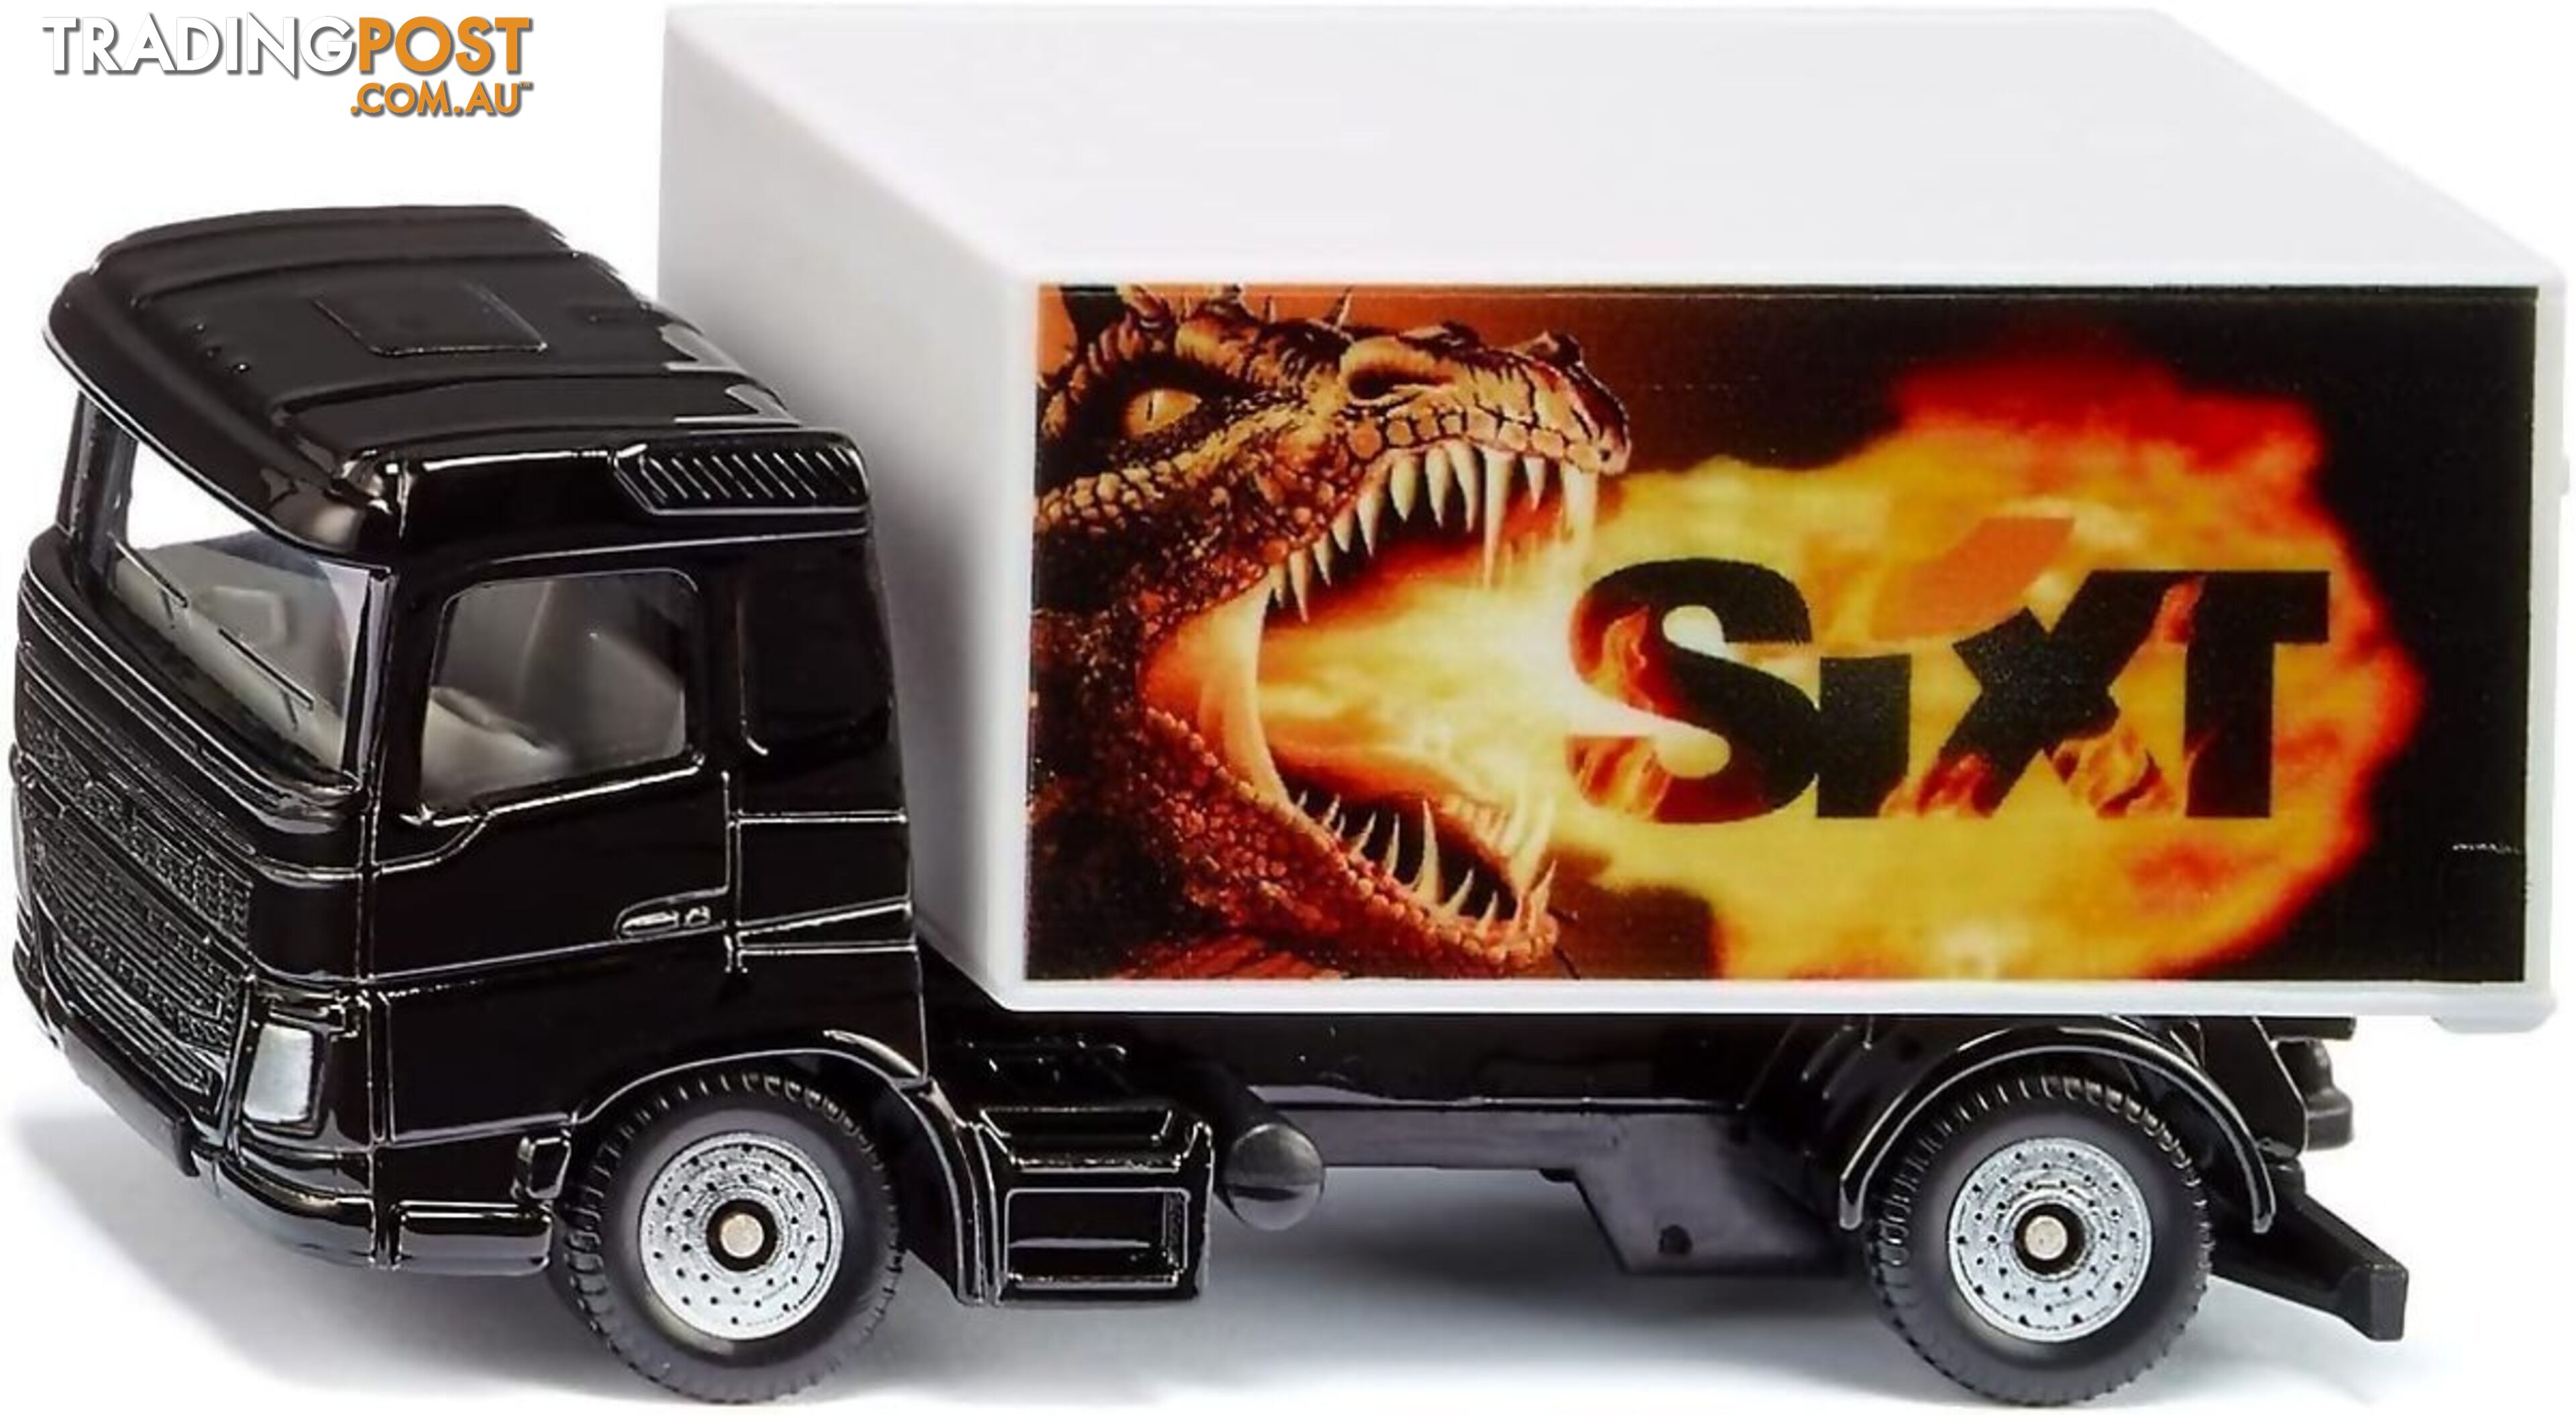 Siku - Siku - Truck With Box Body - Mdsi1107 - 4006874011070